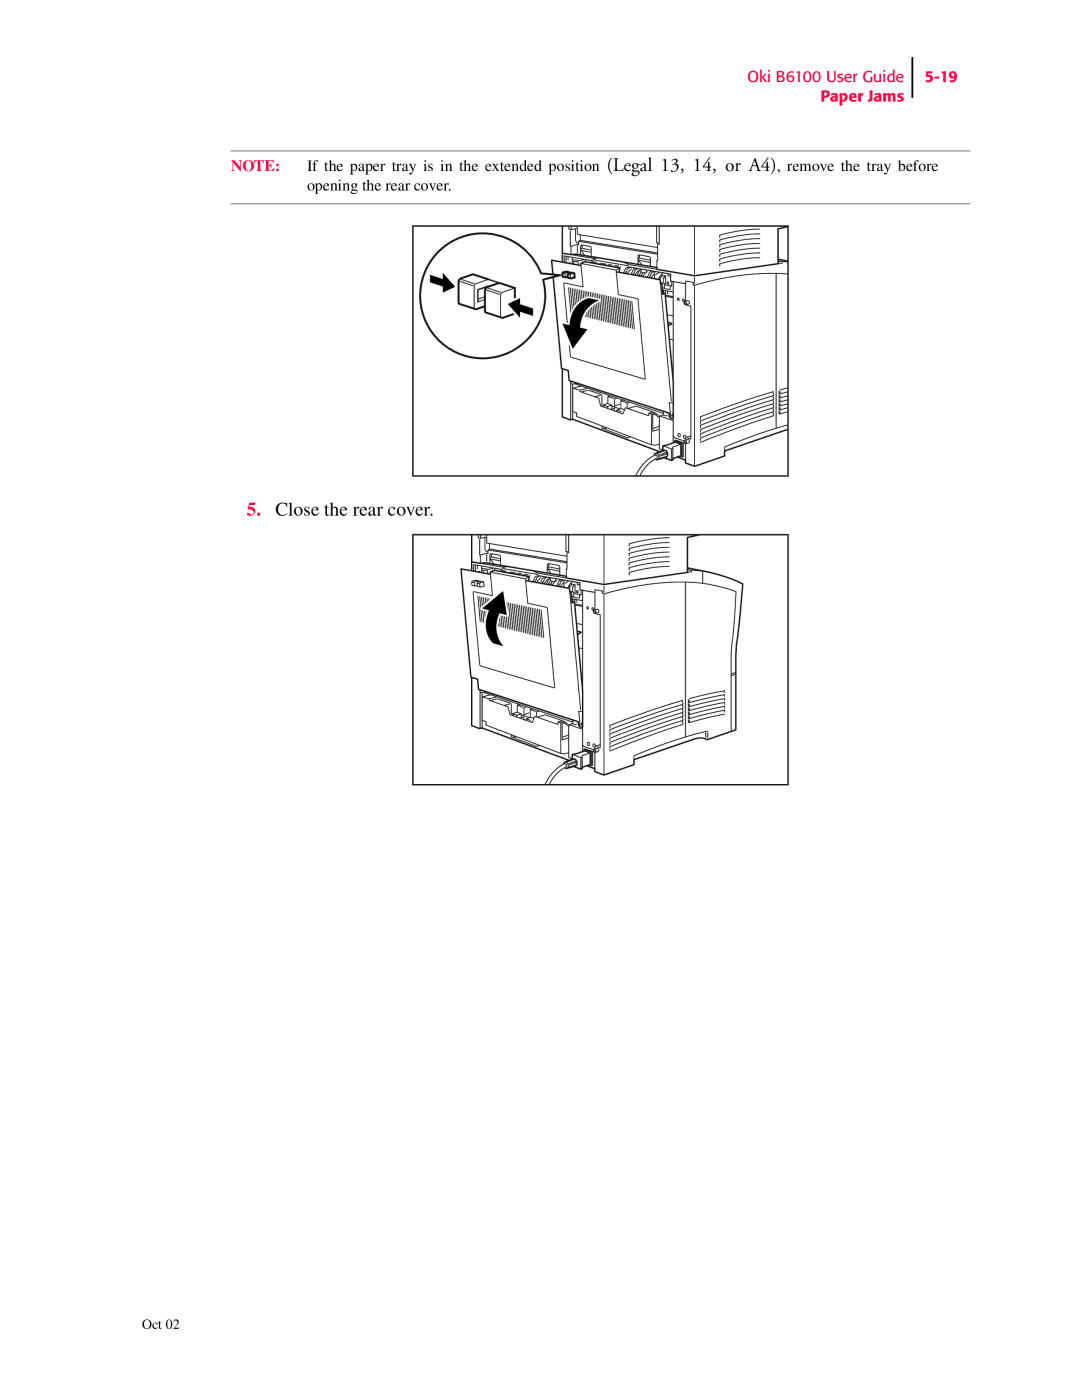 Oki manual Close the rear cover, Oki B6100 User Guide Paper Jams, 5-19 